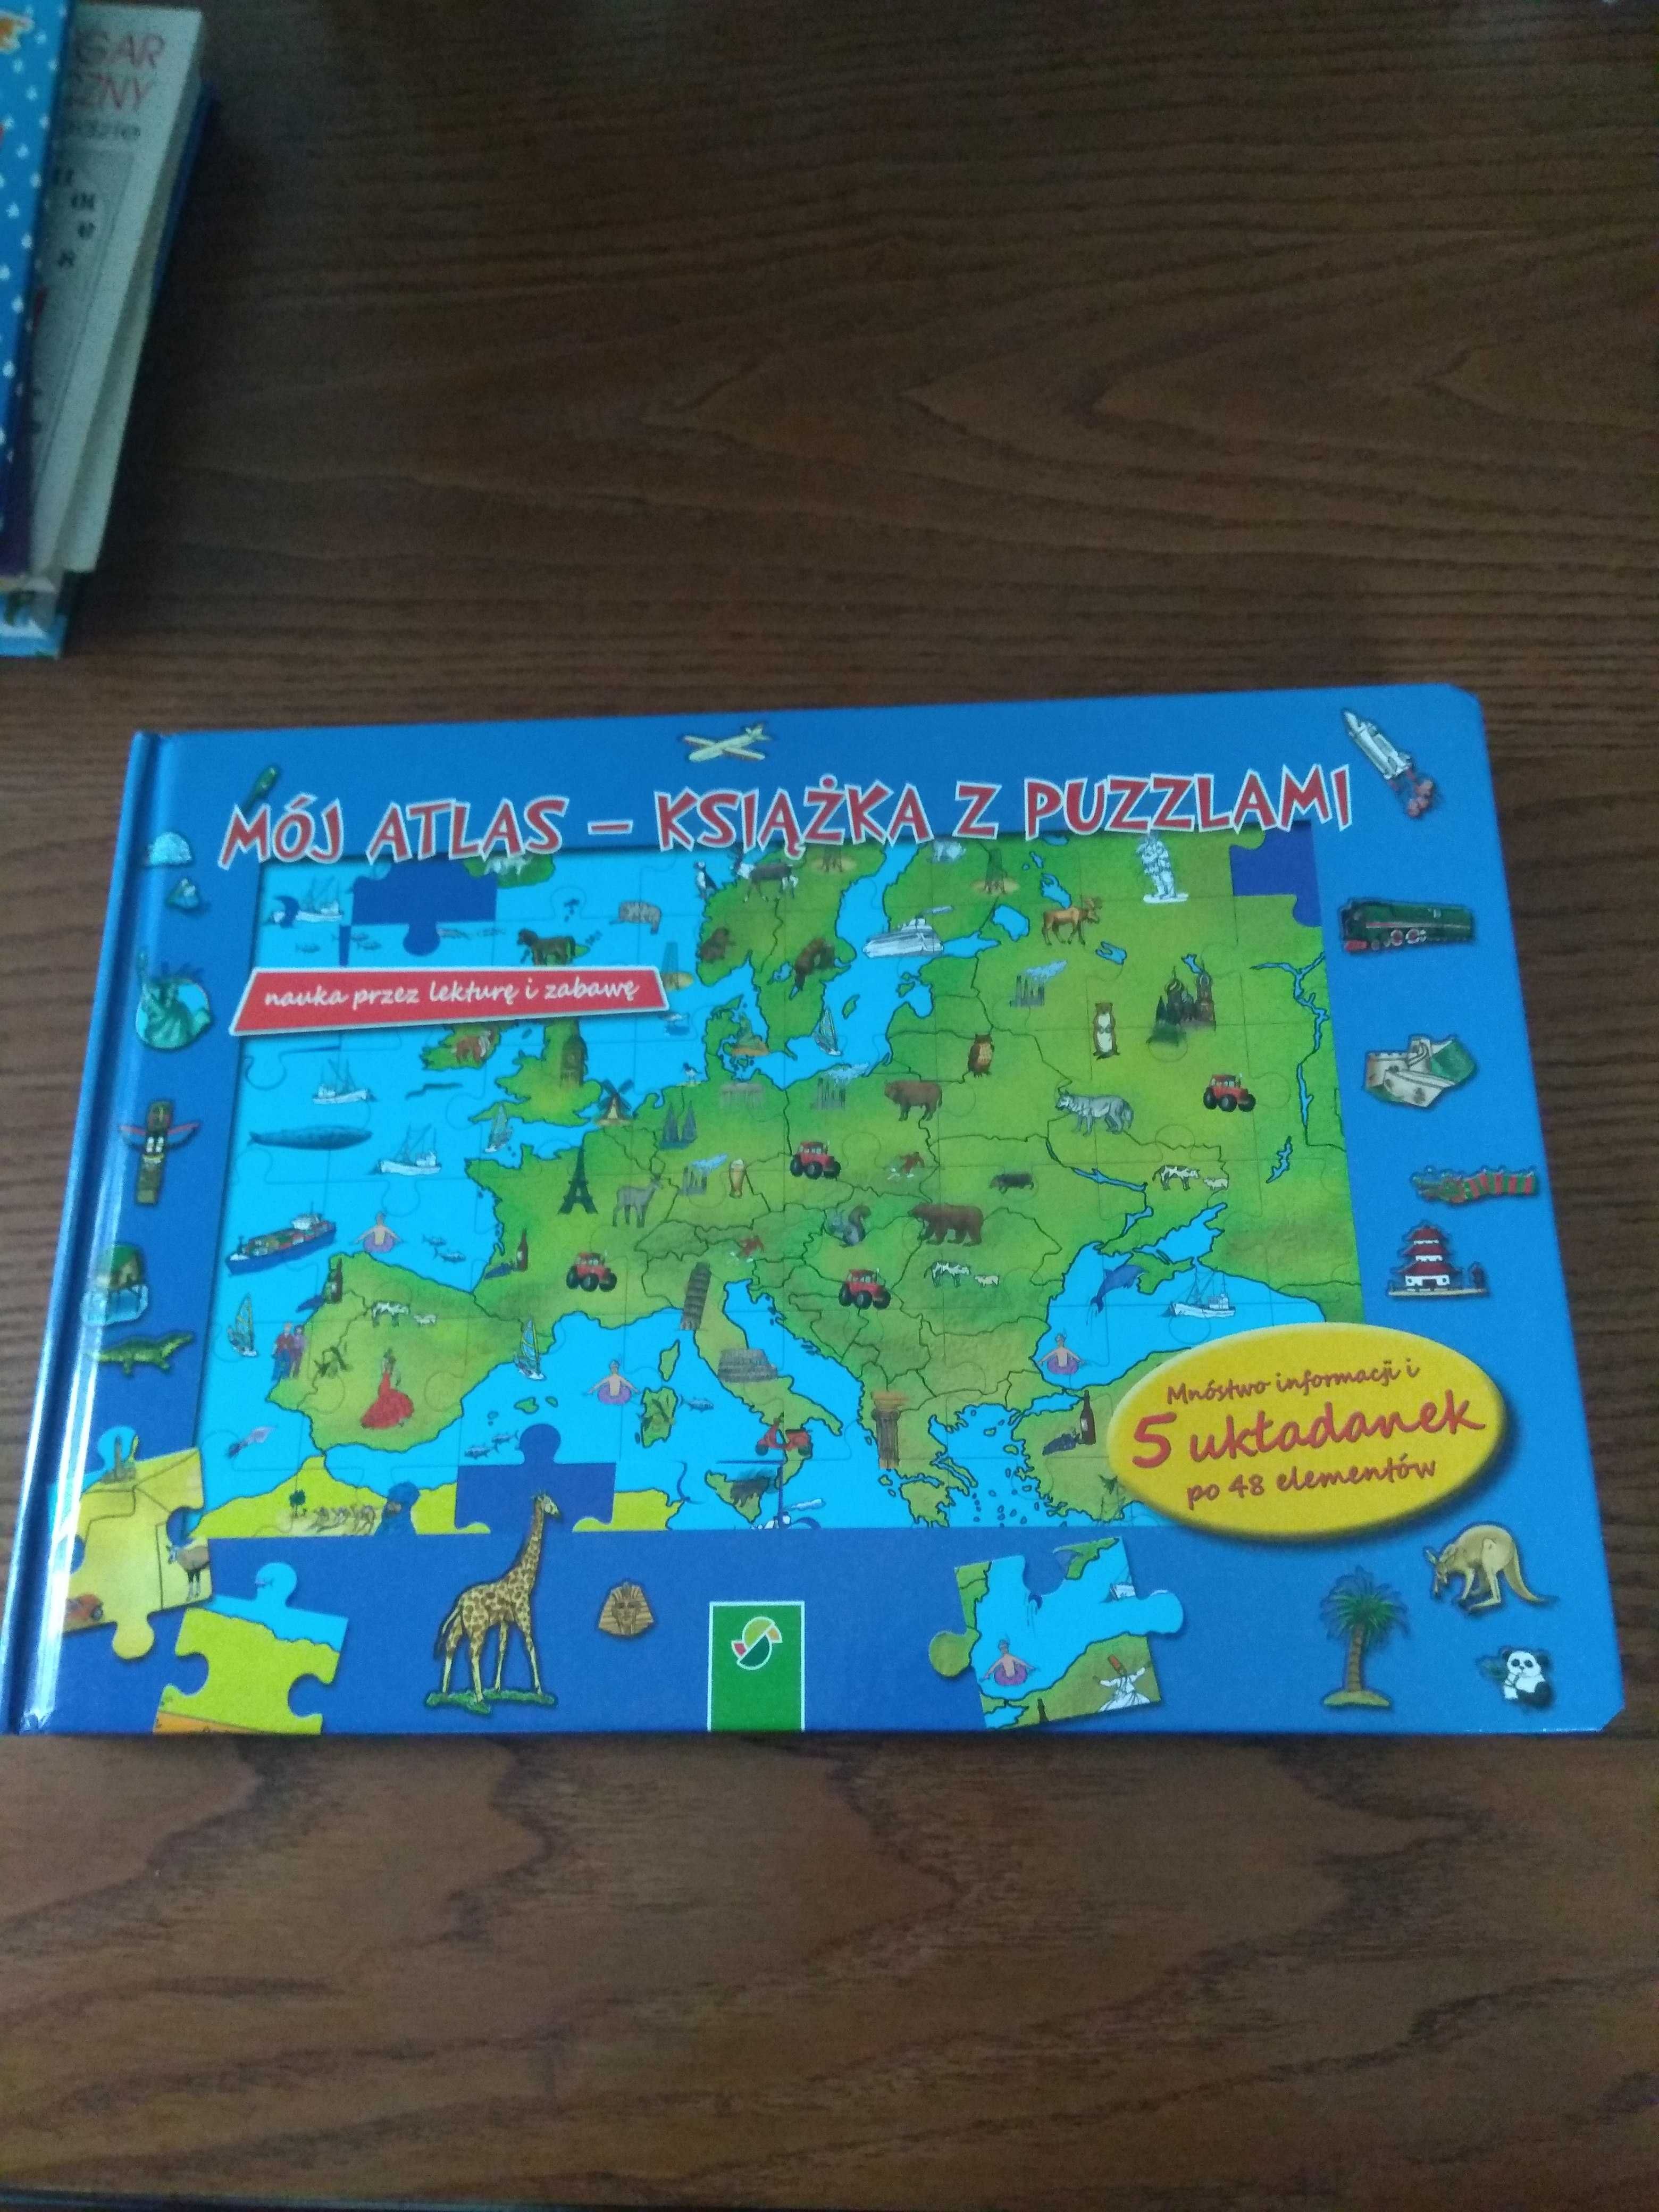 Mój Atlas książka z puzzlami